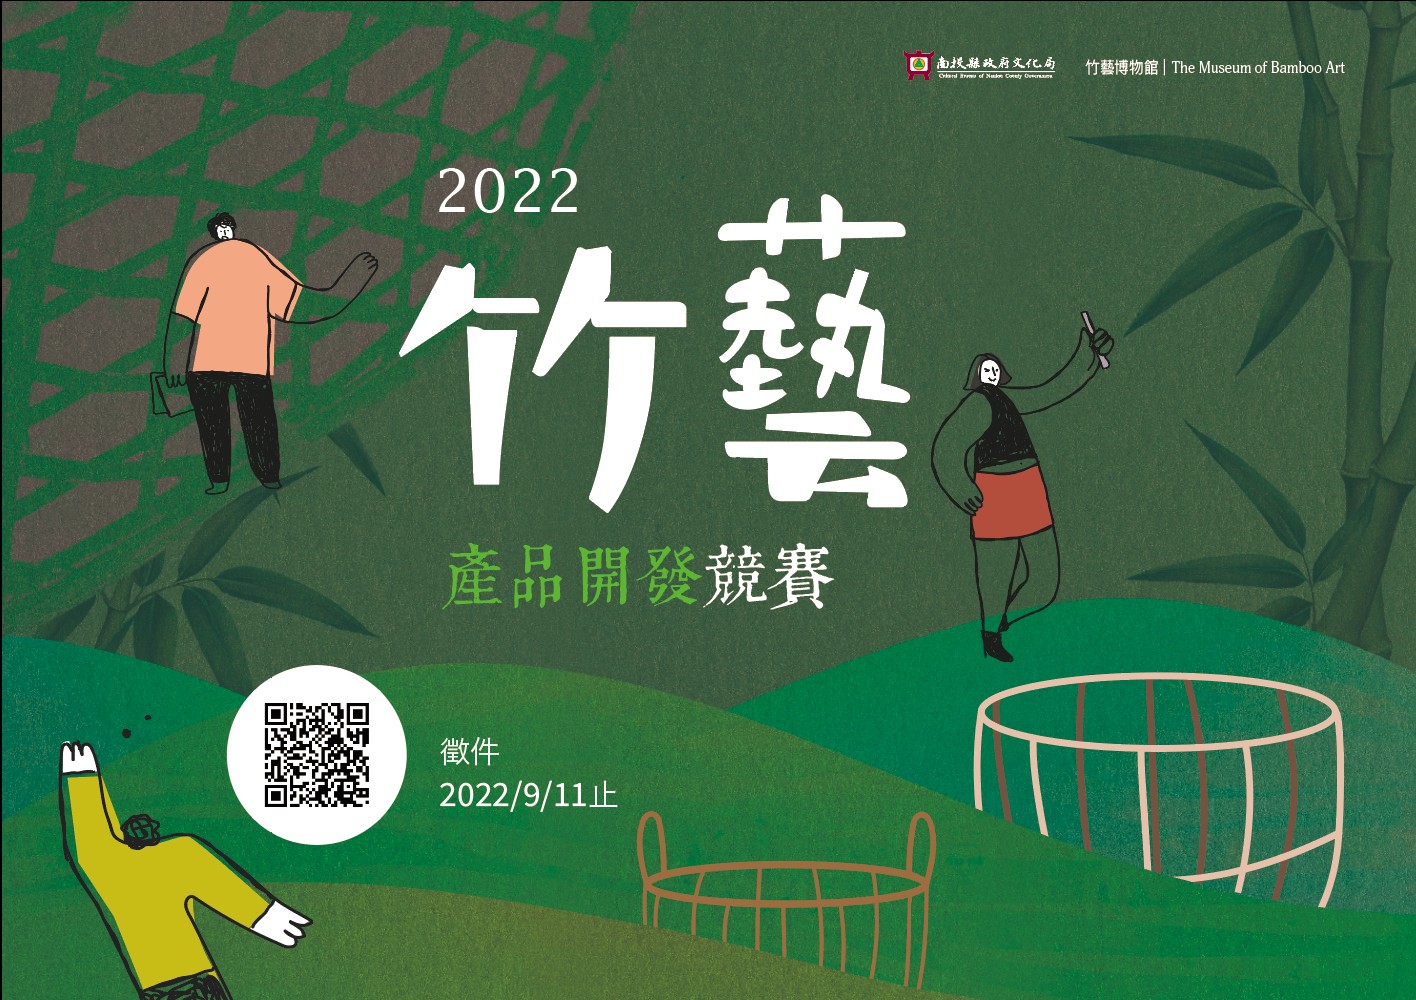 Image-2022竹藝產品開發競賽 海報